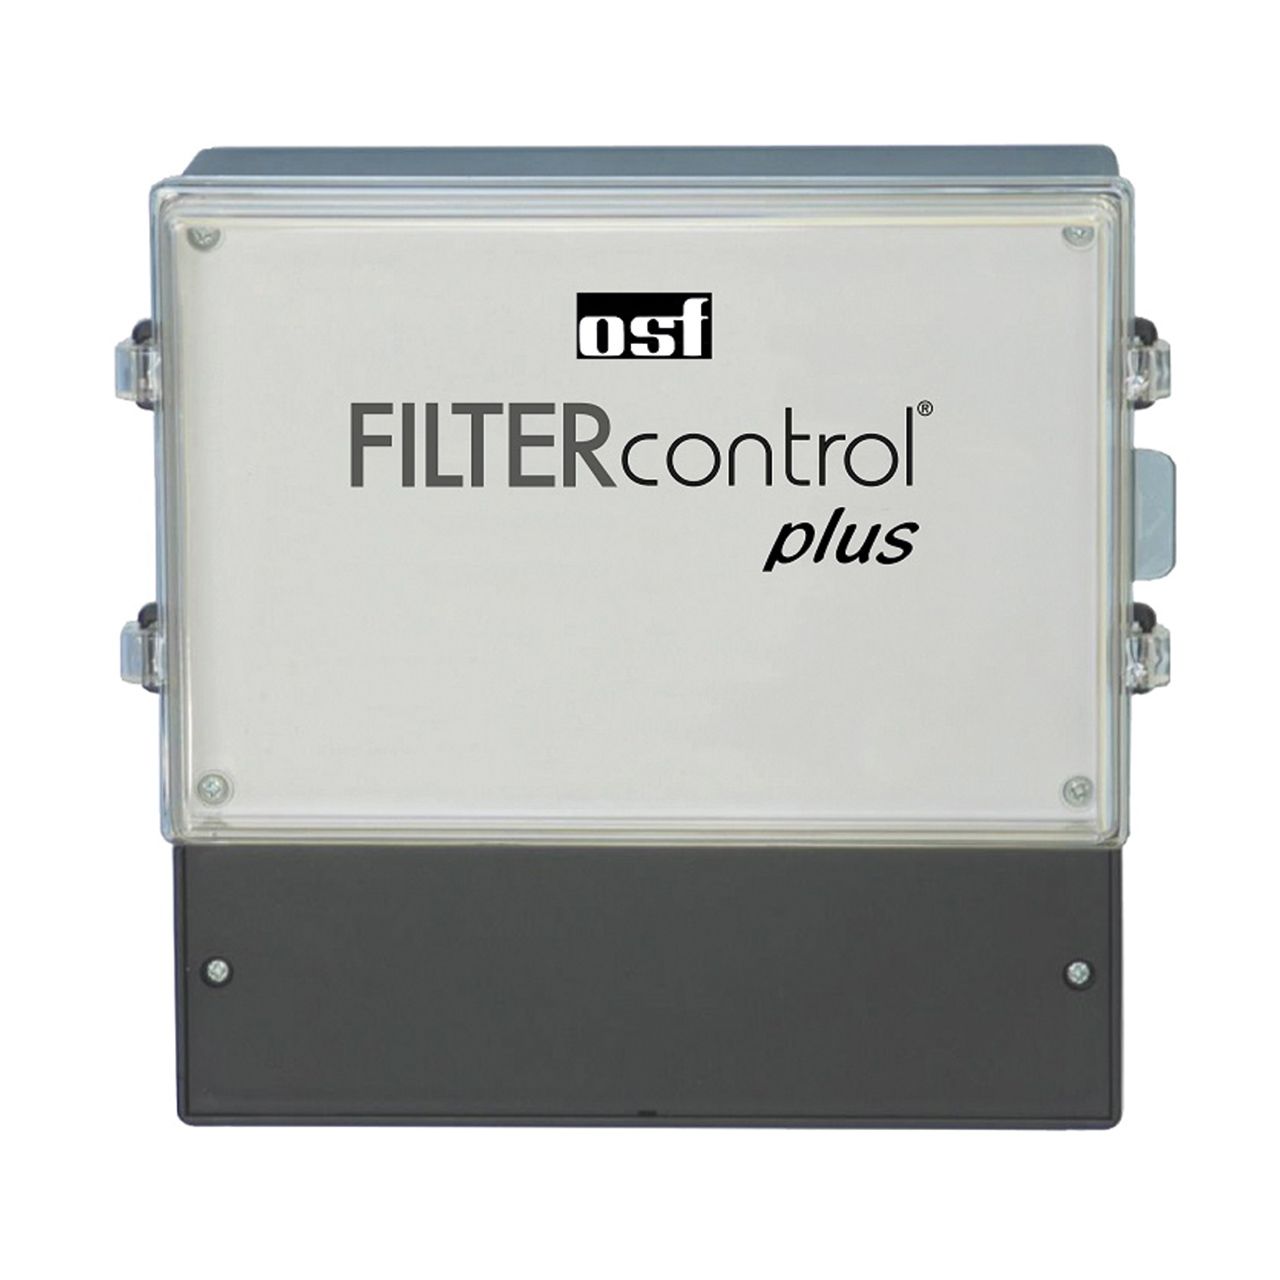 OSF Filter Control plus